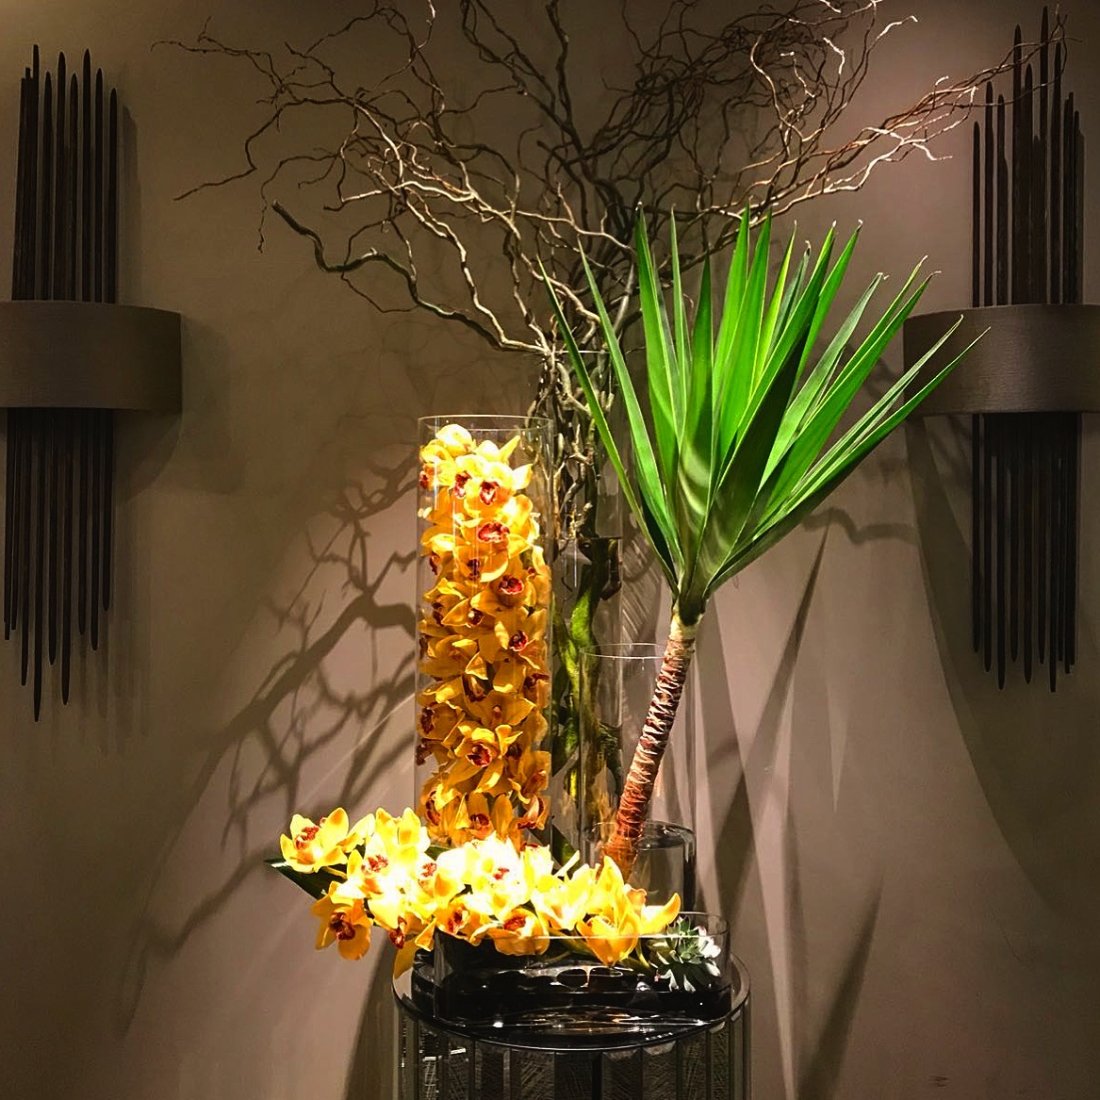 hilton-double-tree-hotel-lobby-flowers